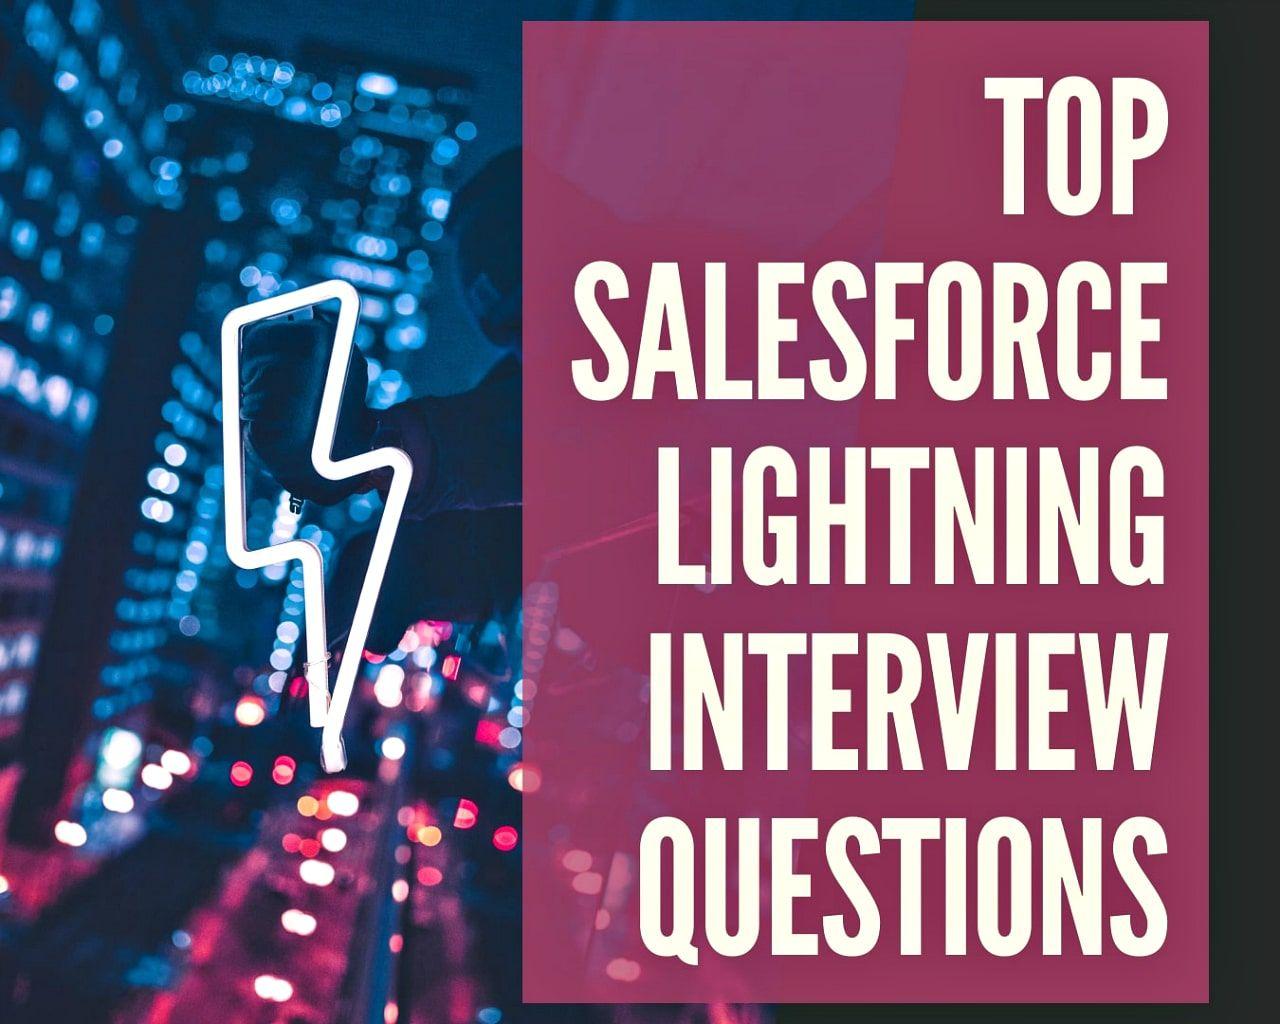 Top 25 Salesforce Lightning Interview Questions